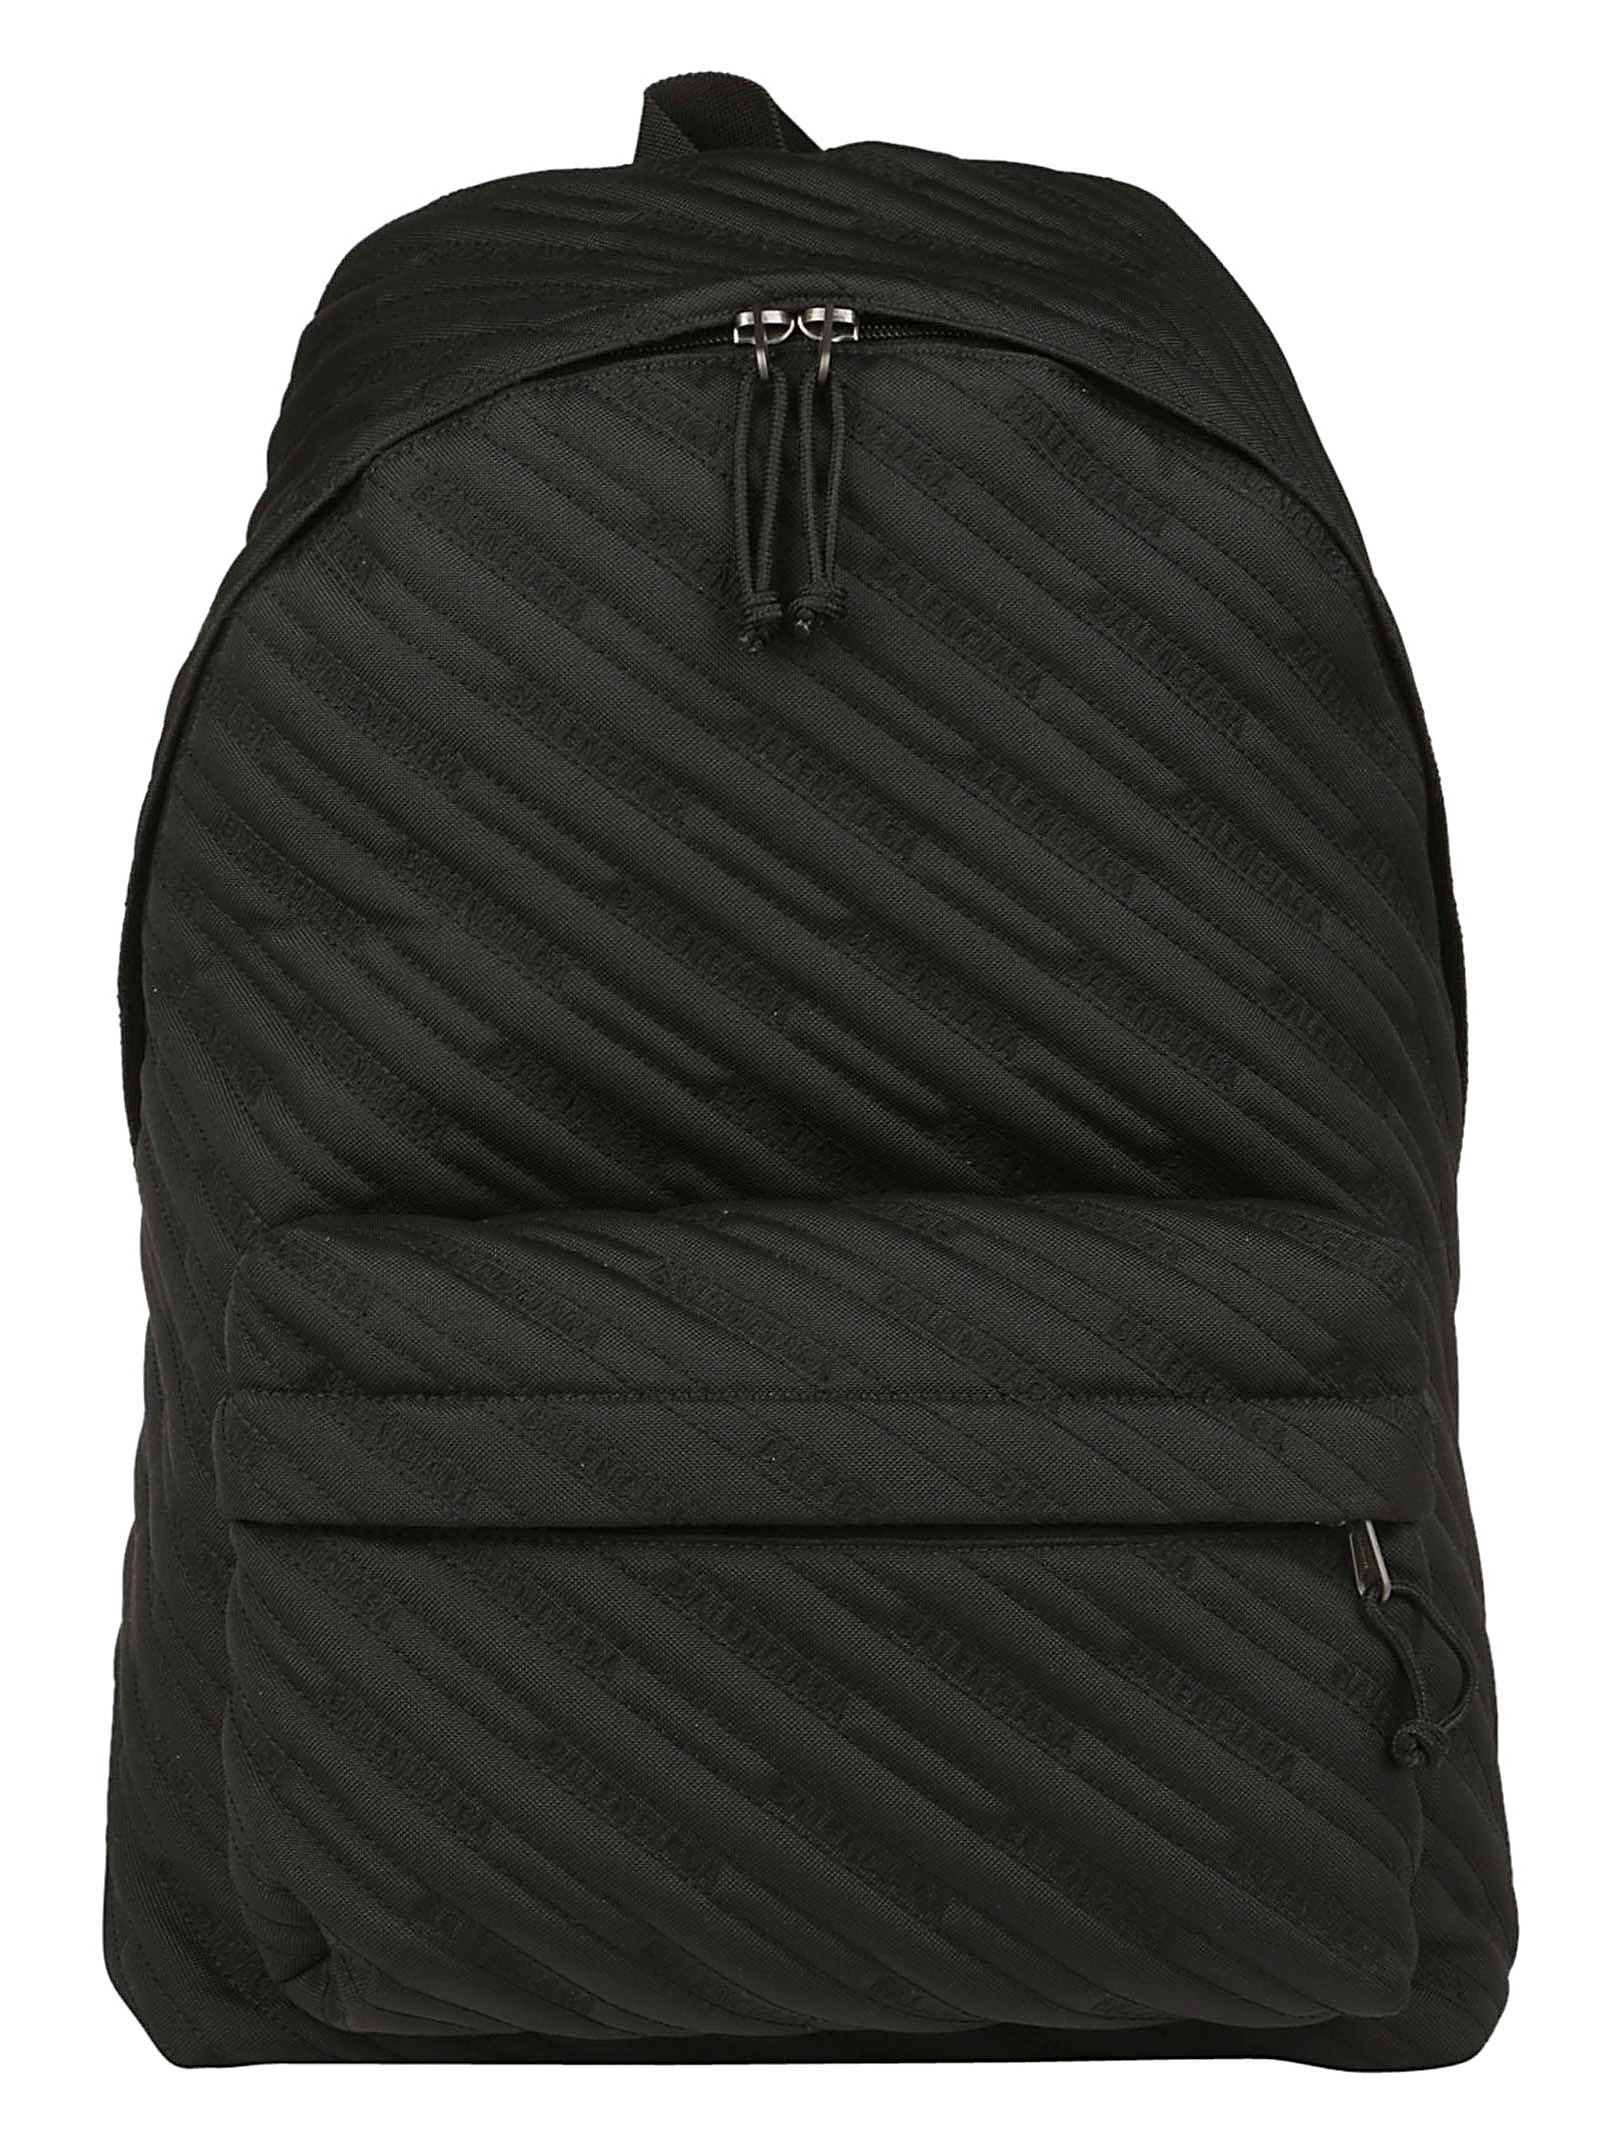 balenciaga backpack black